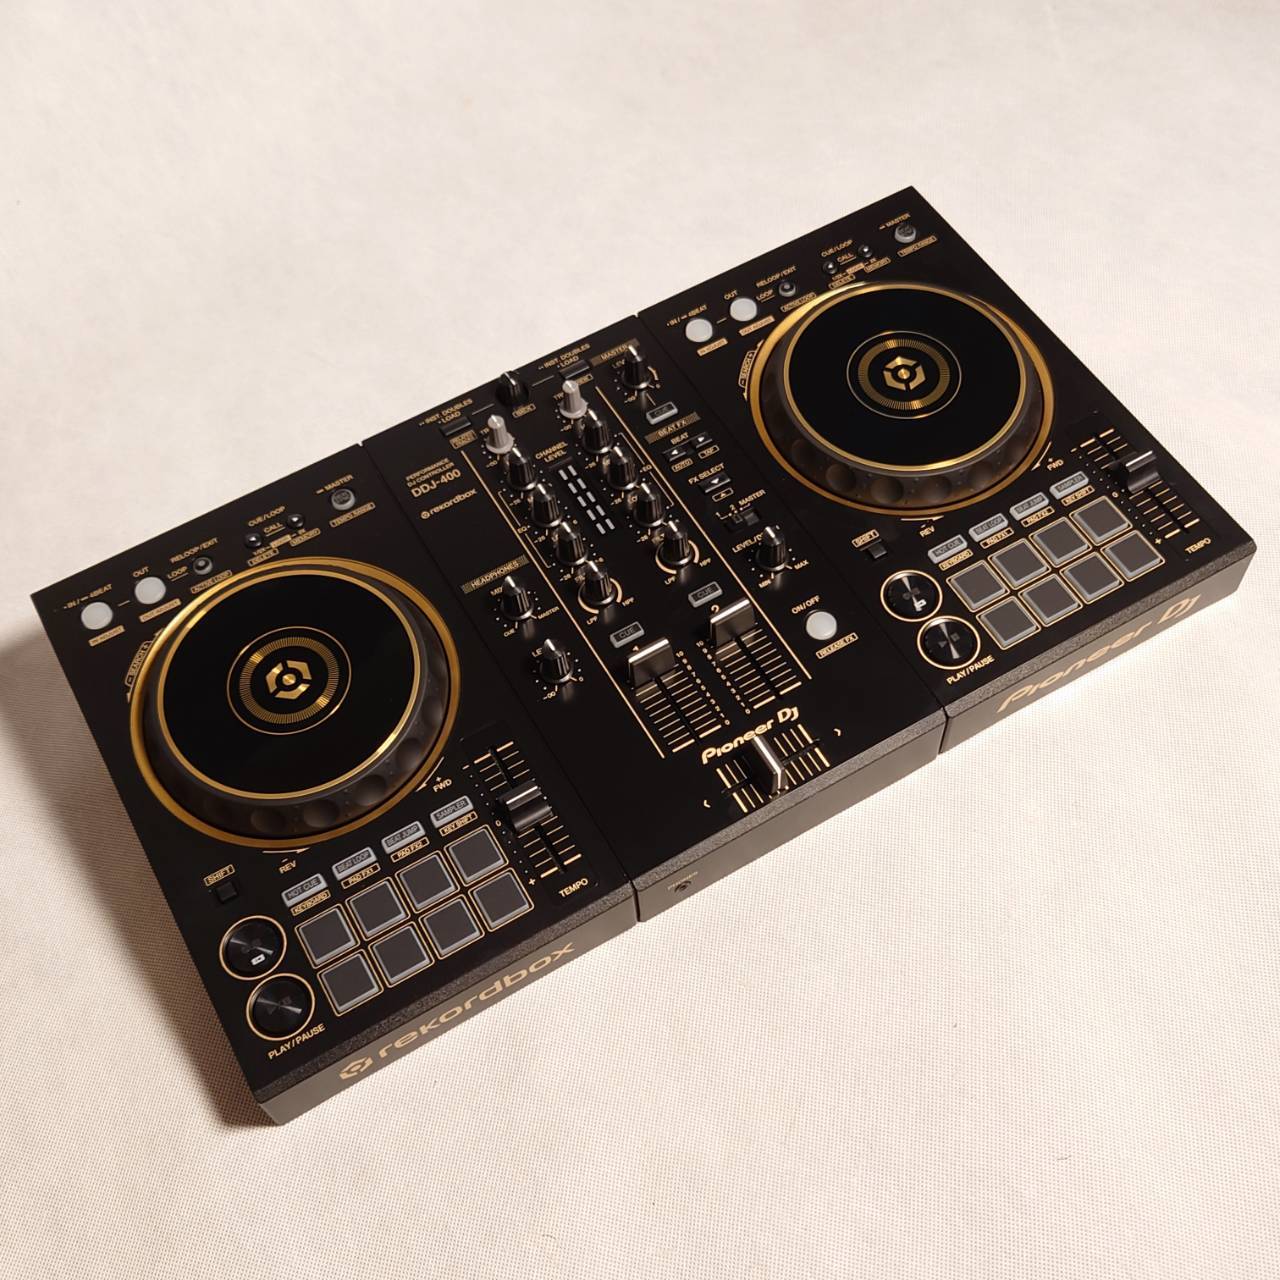 ddj-400 Pioneer 箱、説明書付きddj-400 - DJ機器